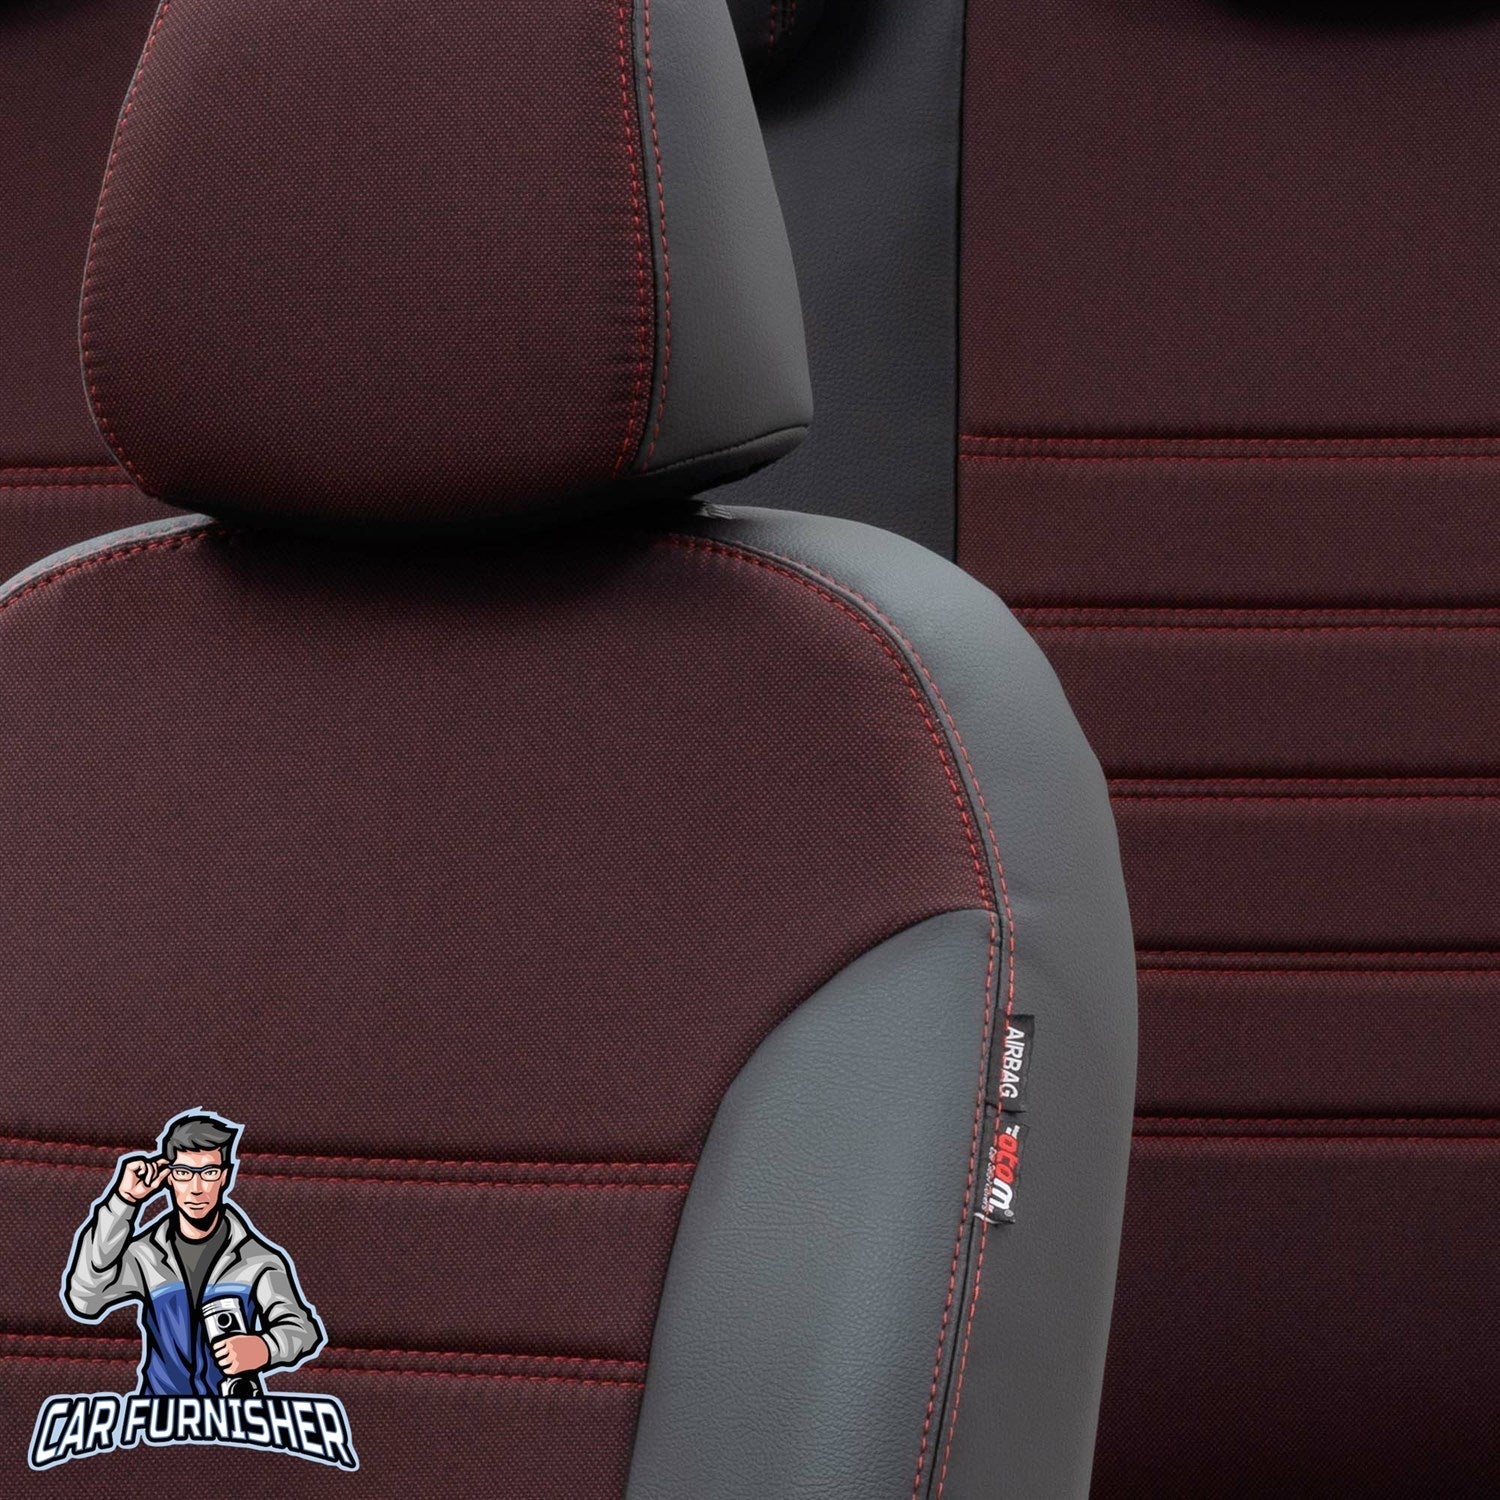 Dacia Sandero Car Seat Covers 2008-2023 B90 / Stepway Paris Red Full Set (5 Seats + Handrest) Leather & Fabric